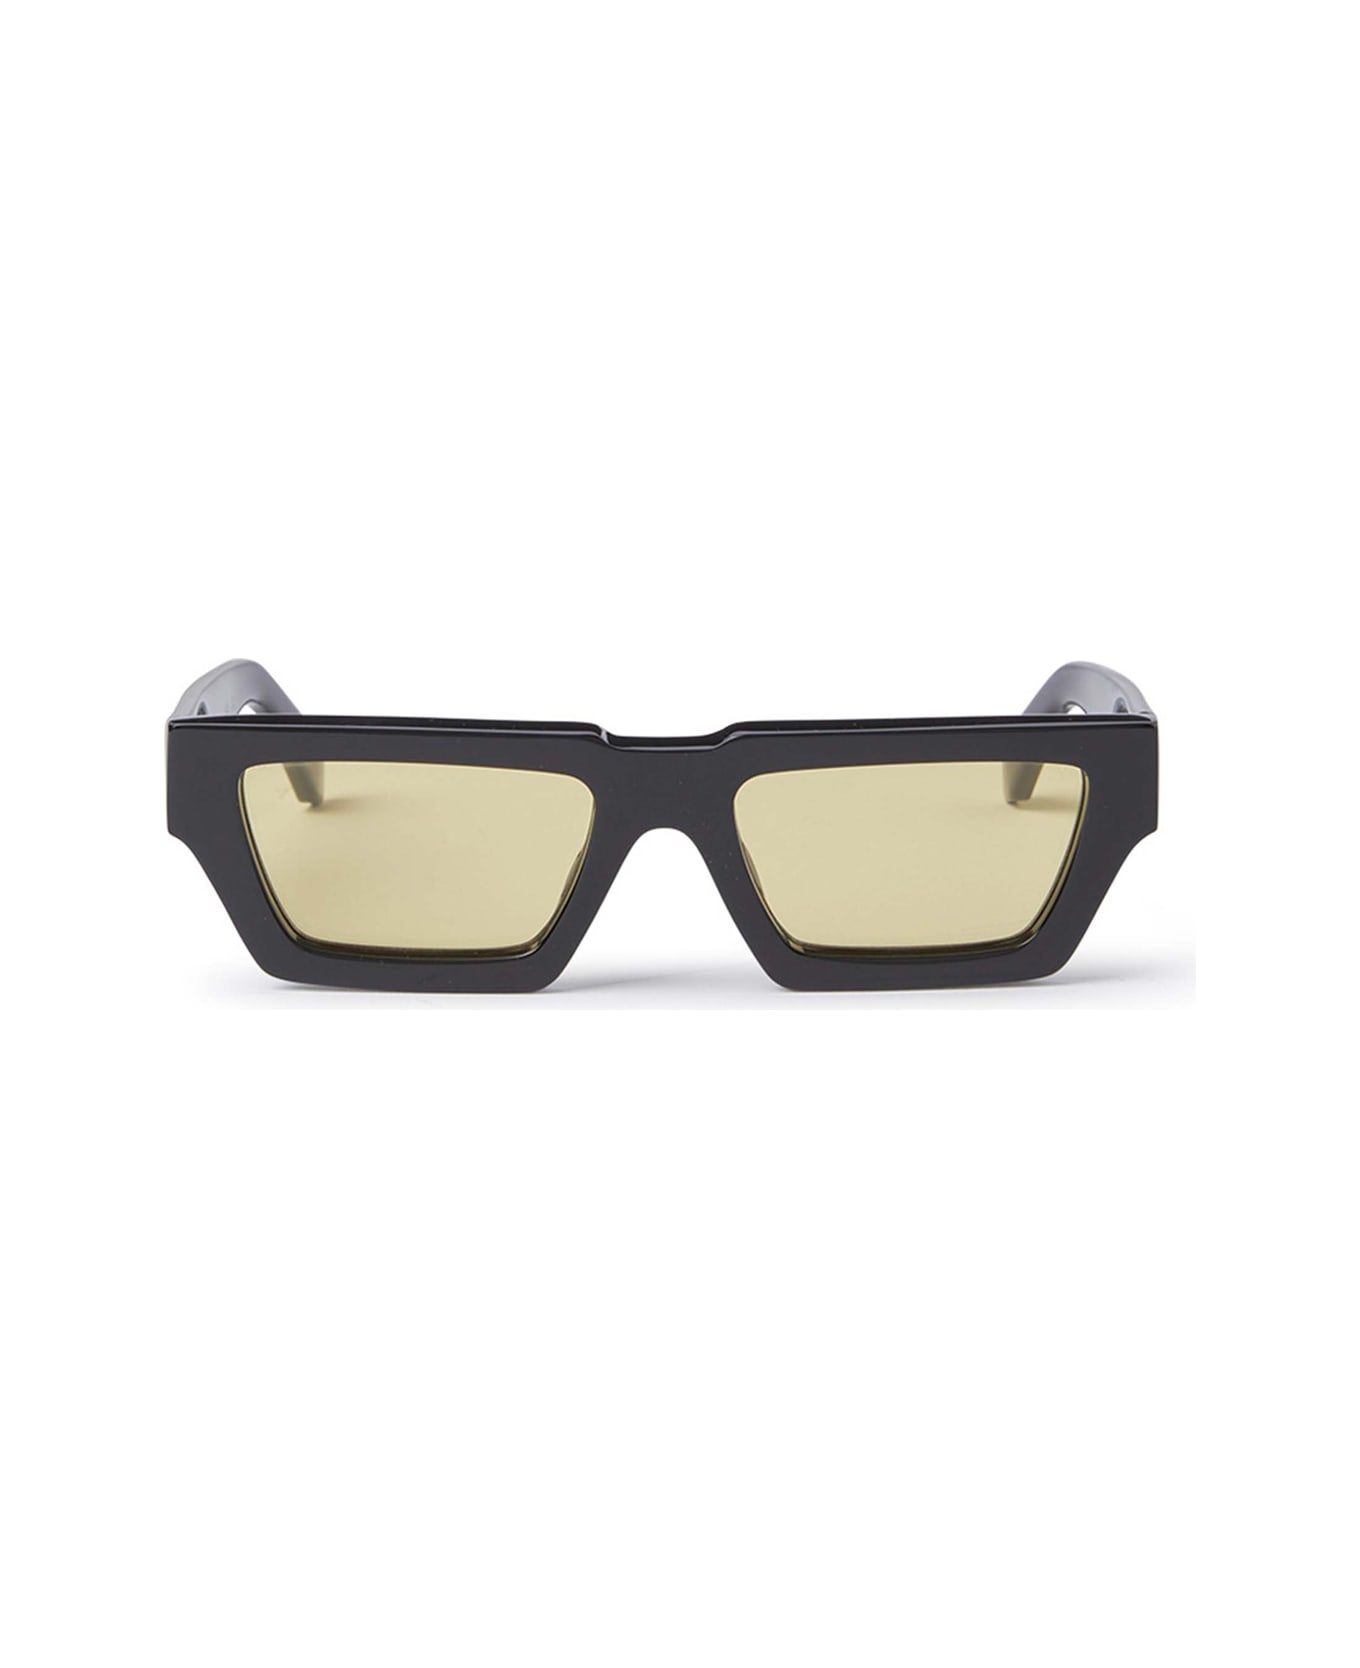 Off-White Oeri129 Manchester 1018 Black Sunglasses - Nero